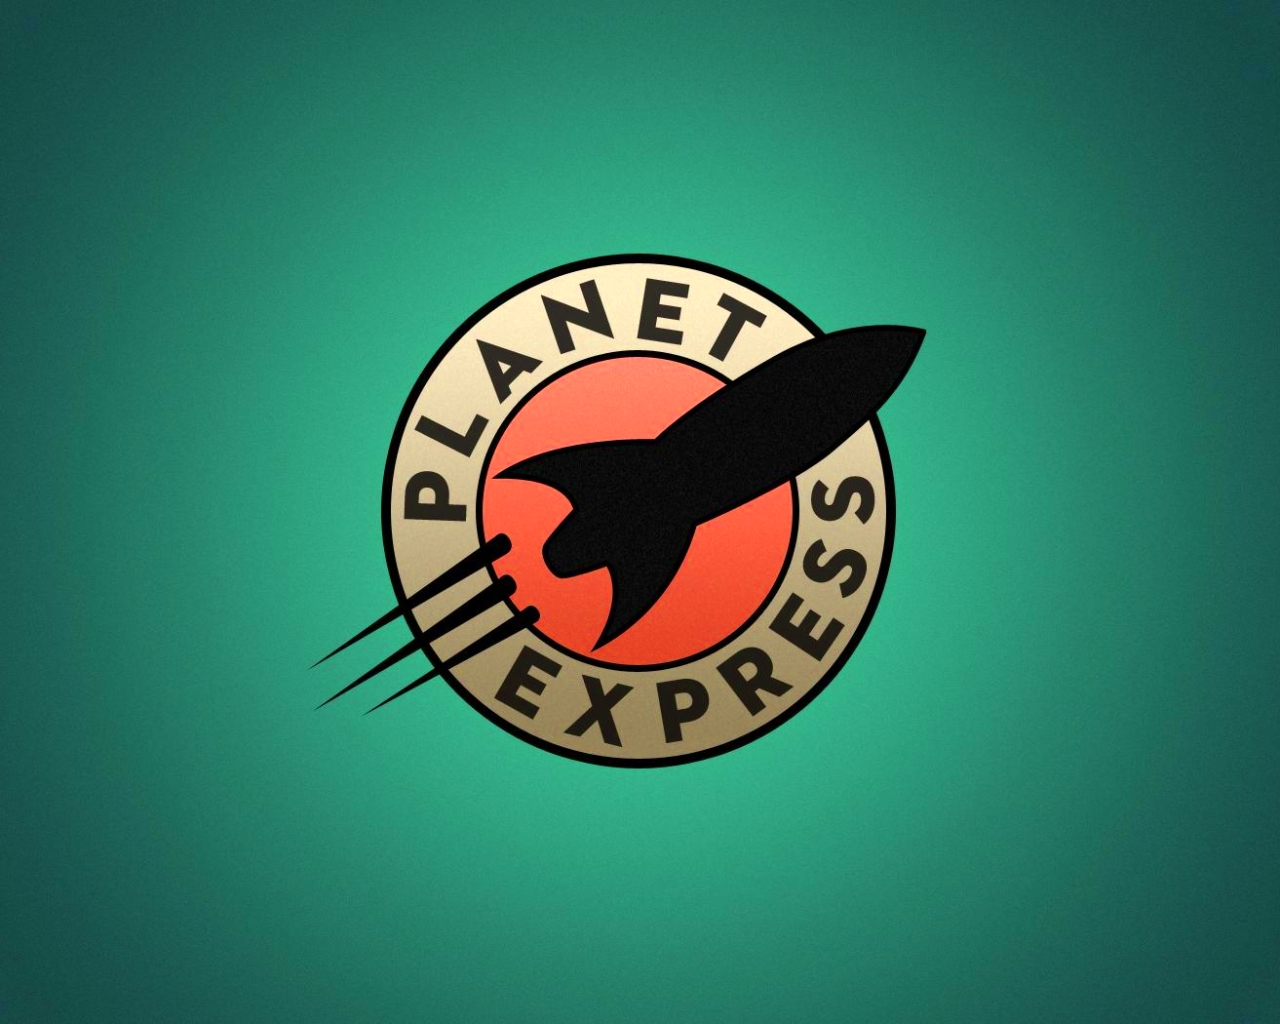 planet express wallpaper,schriftart,grafik,emblem,illustration,symbol